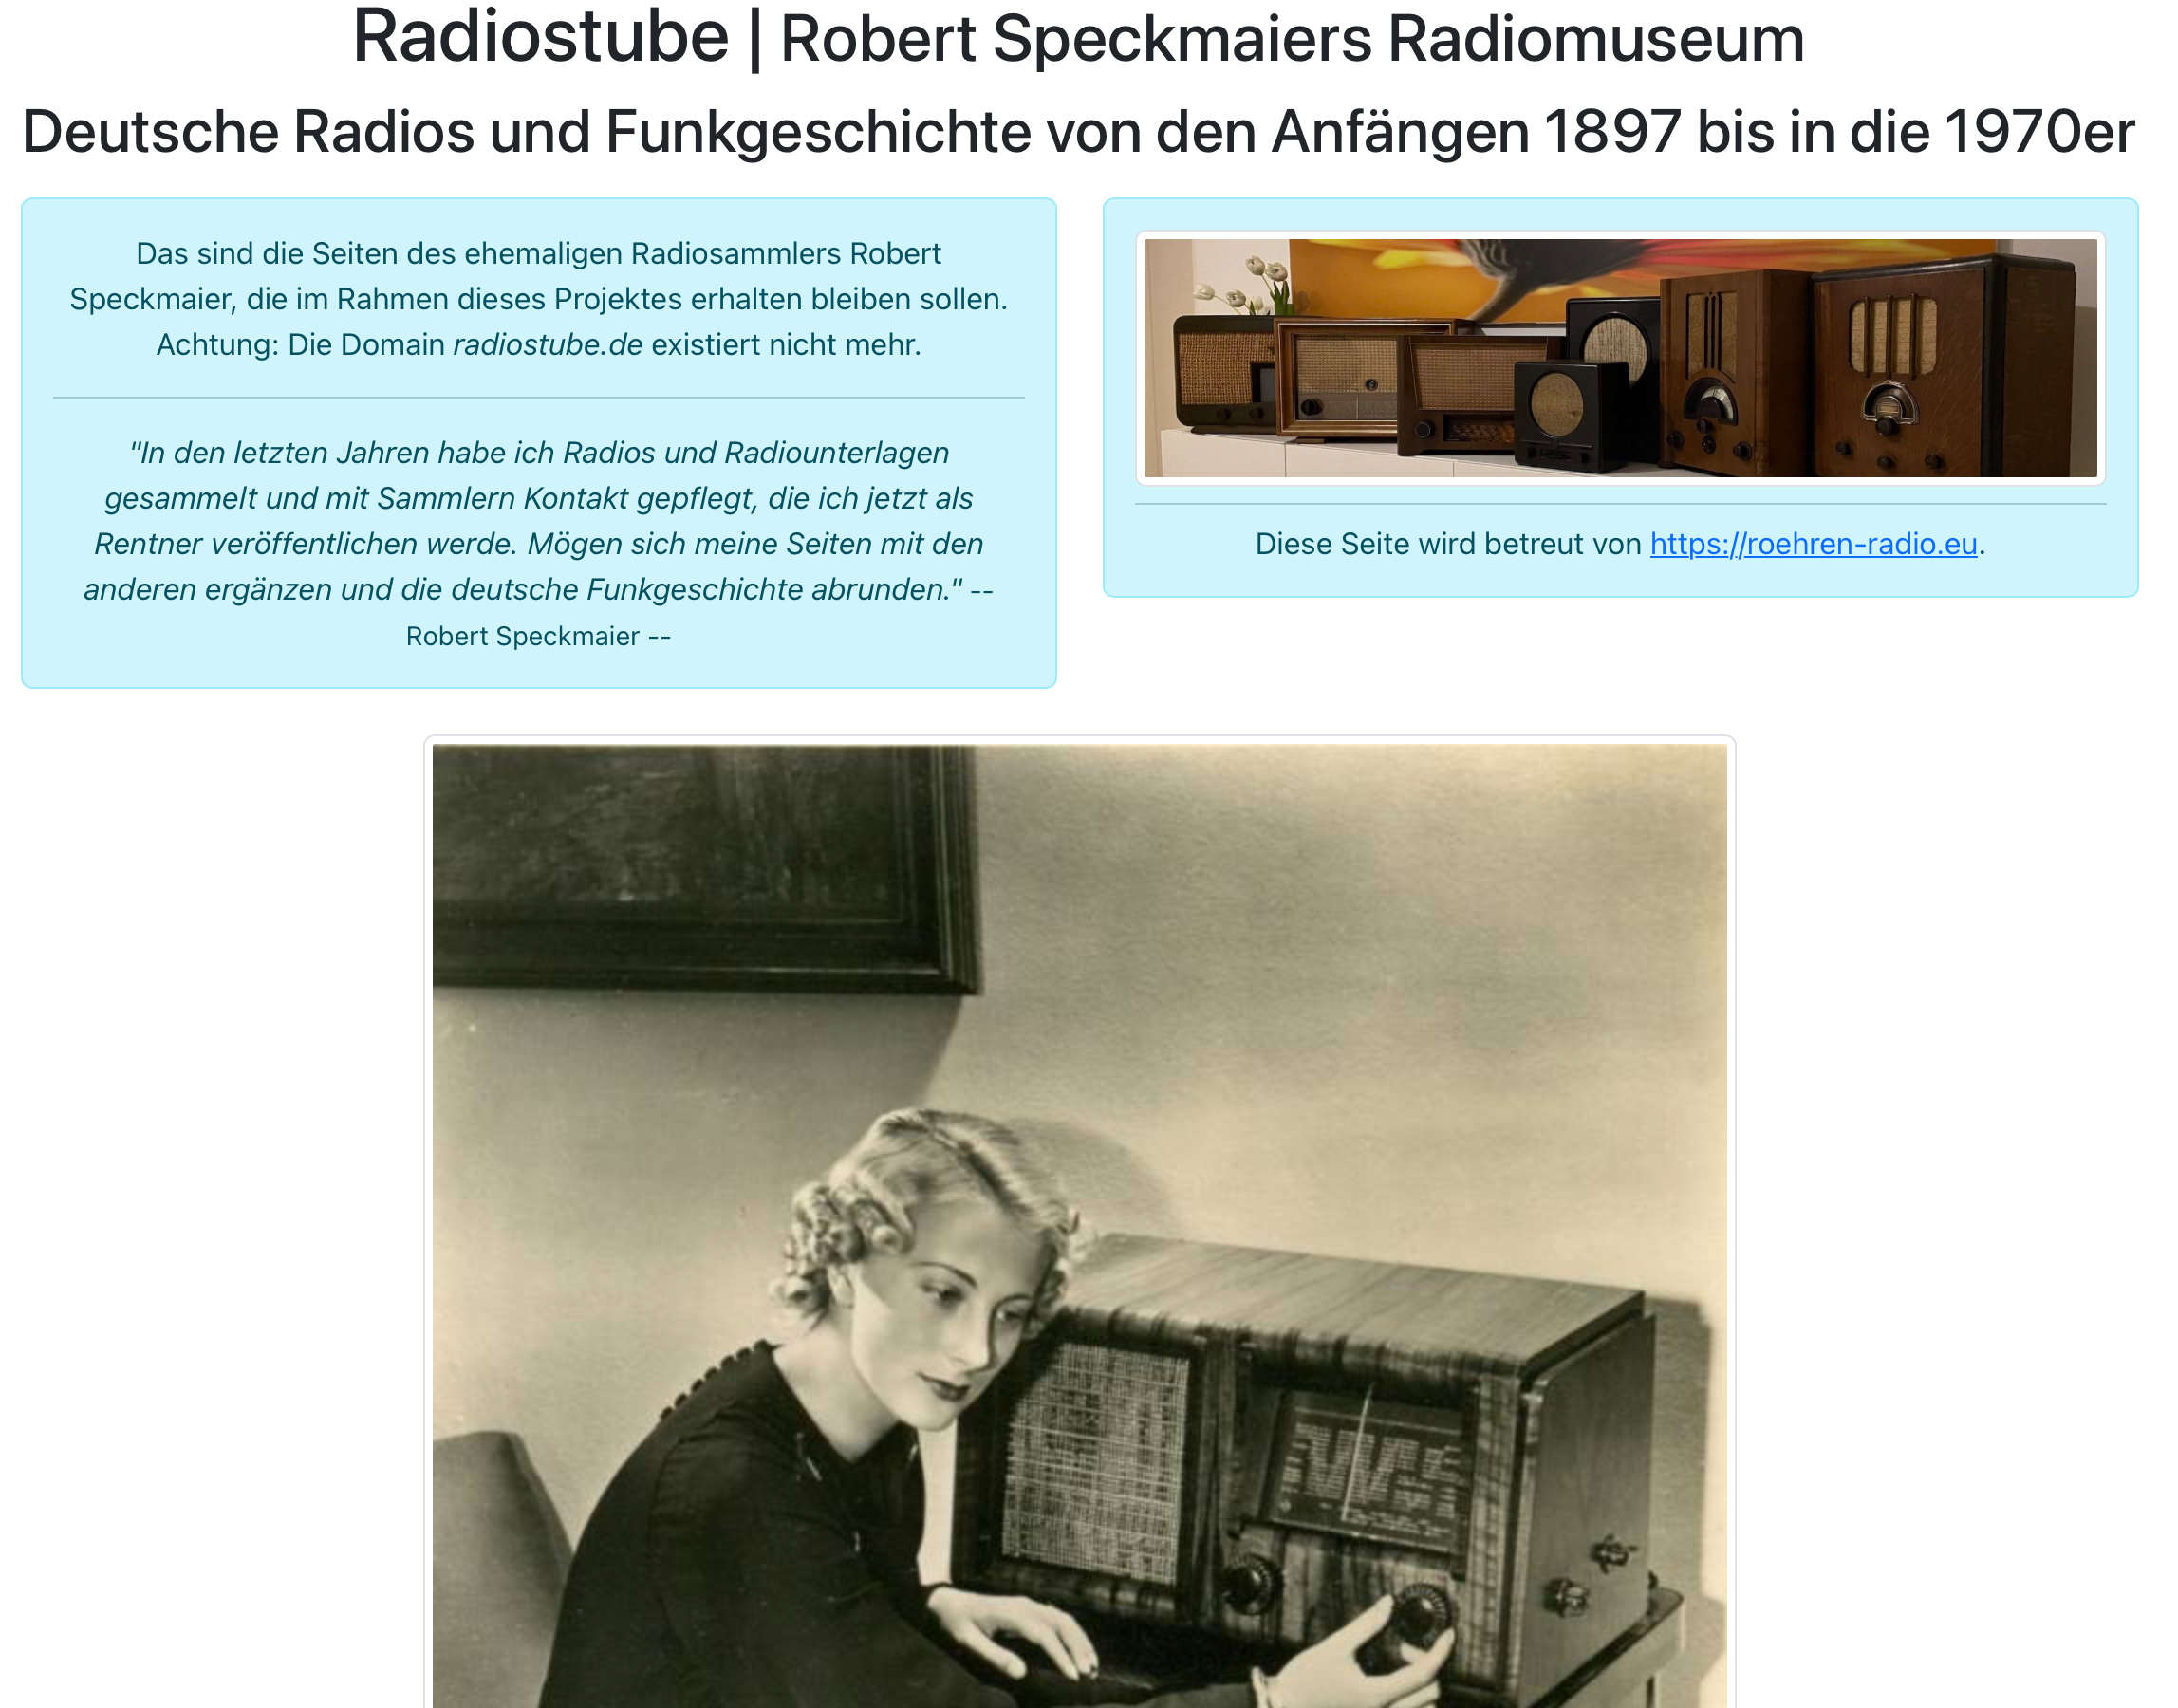 Radiostube - Robert Speckmaiers Radiomuseum